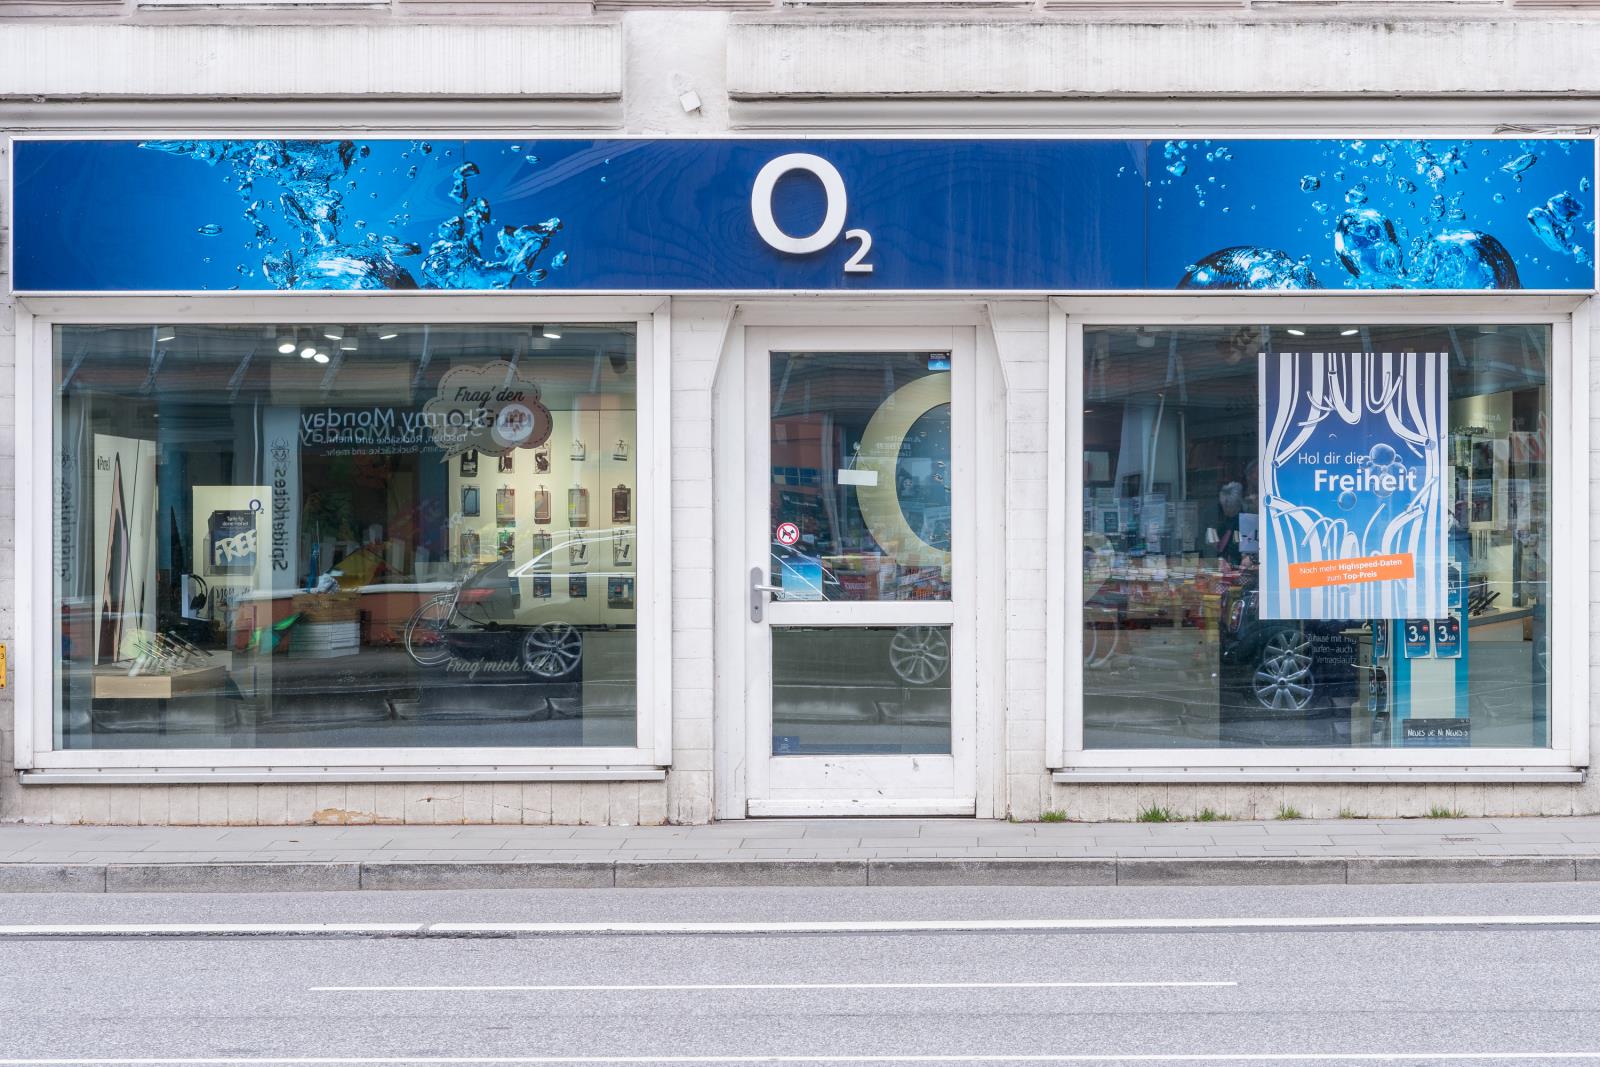 o2 Shop, Grindelallee 33 in Hamburg